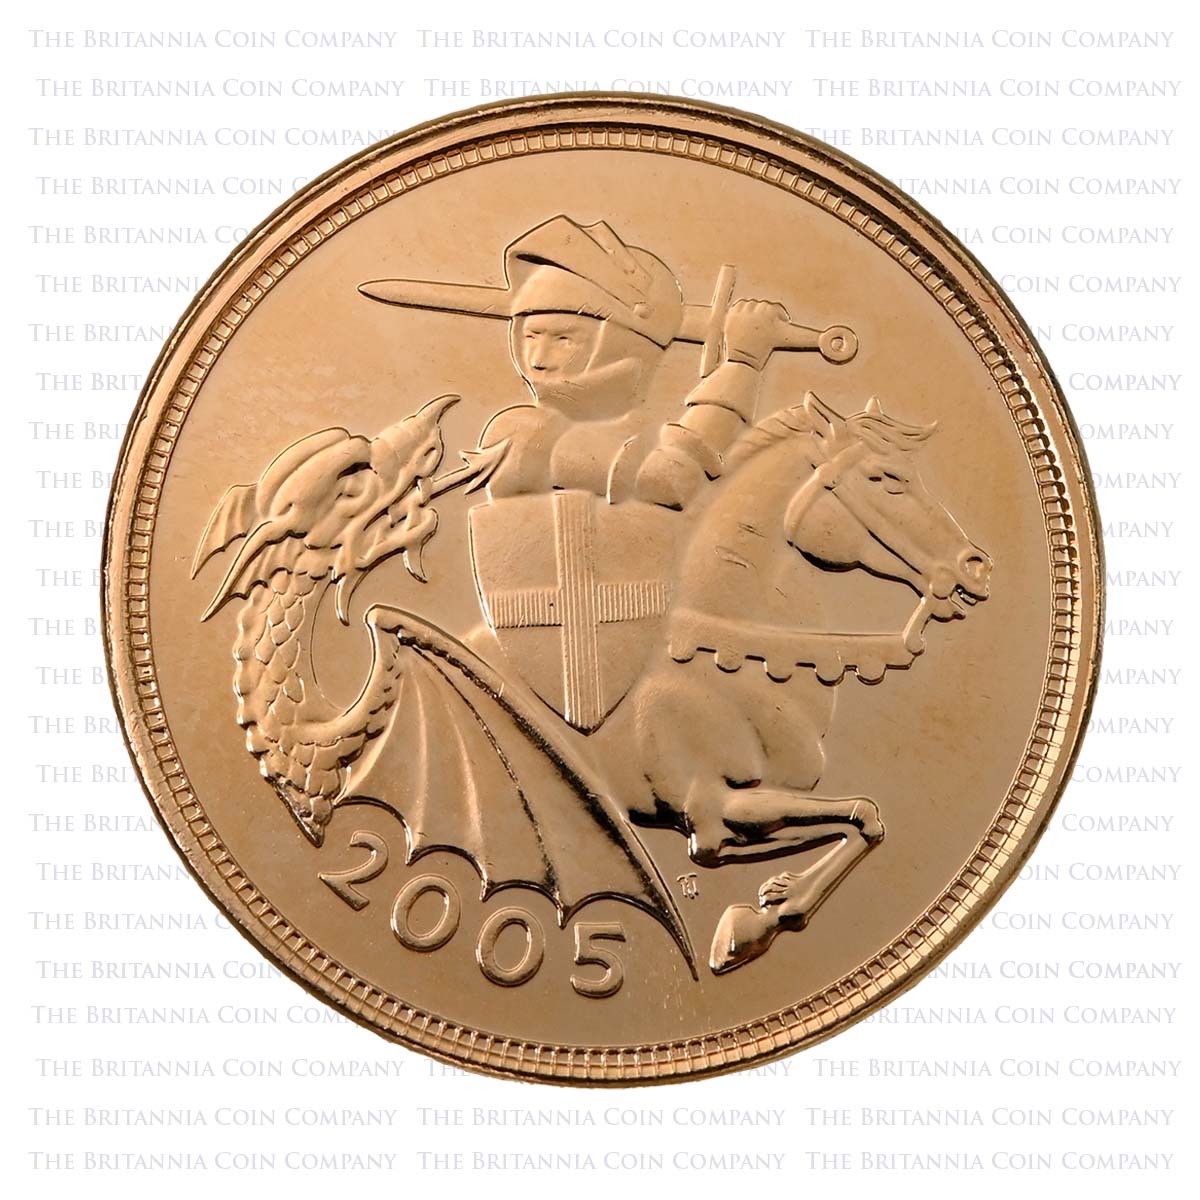 2005 Gold Sovereign